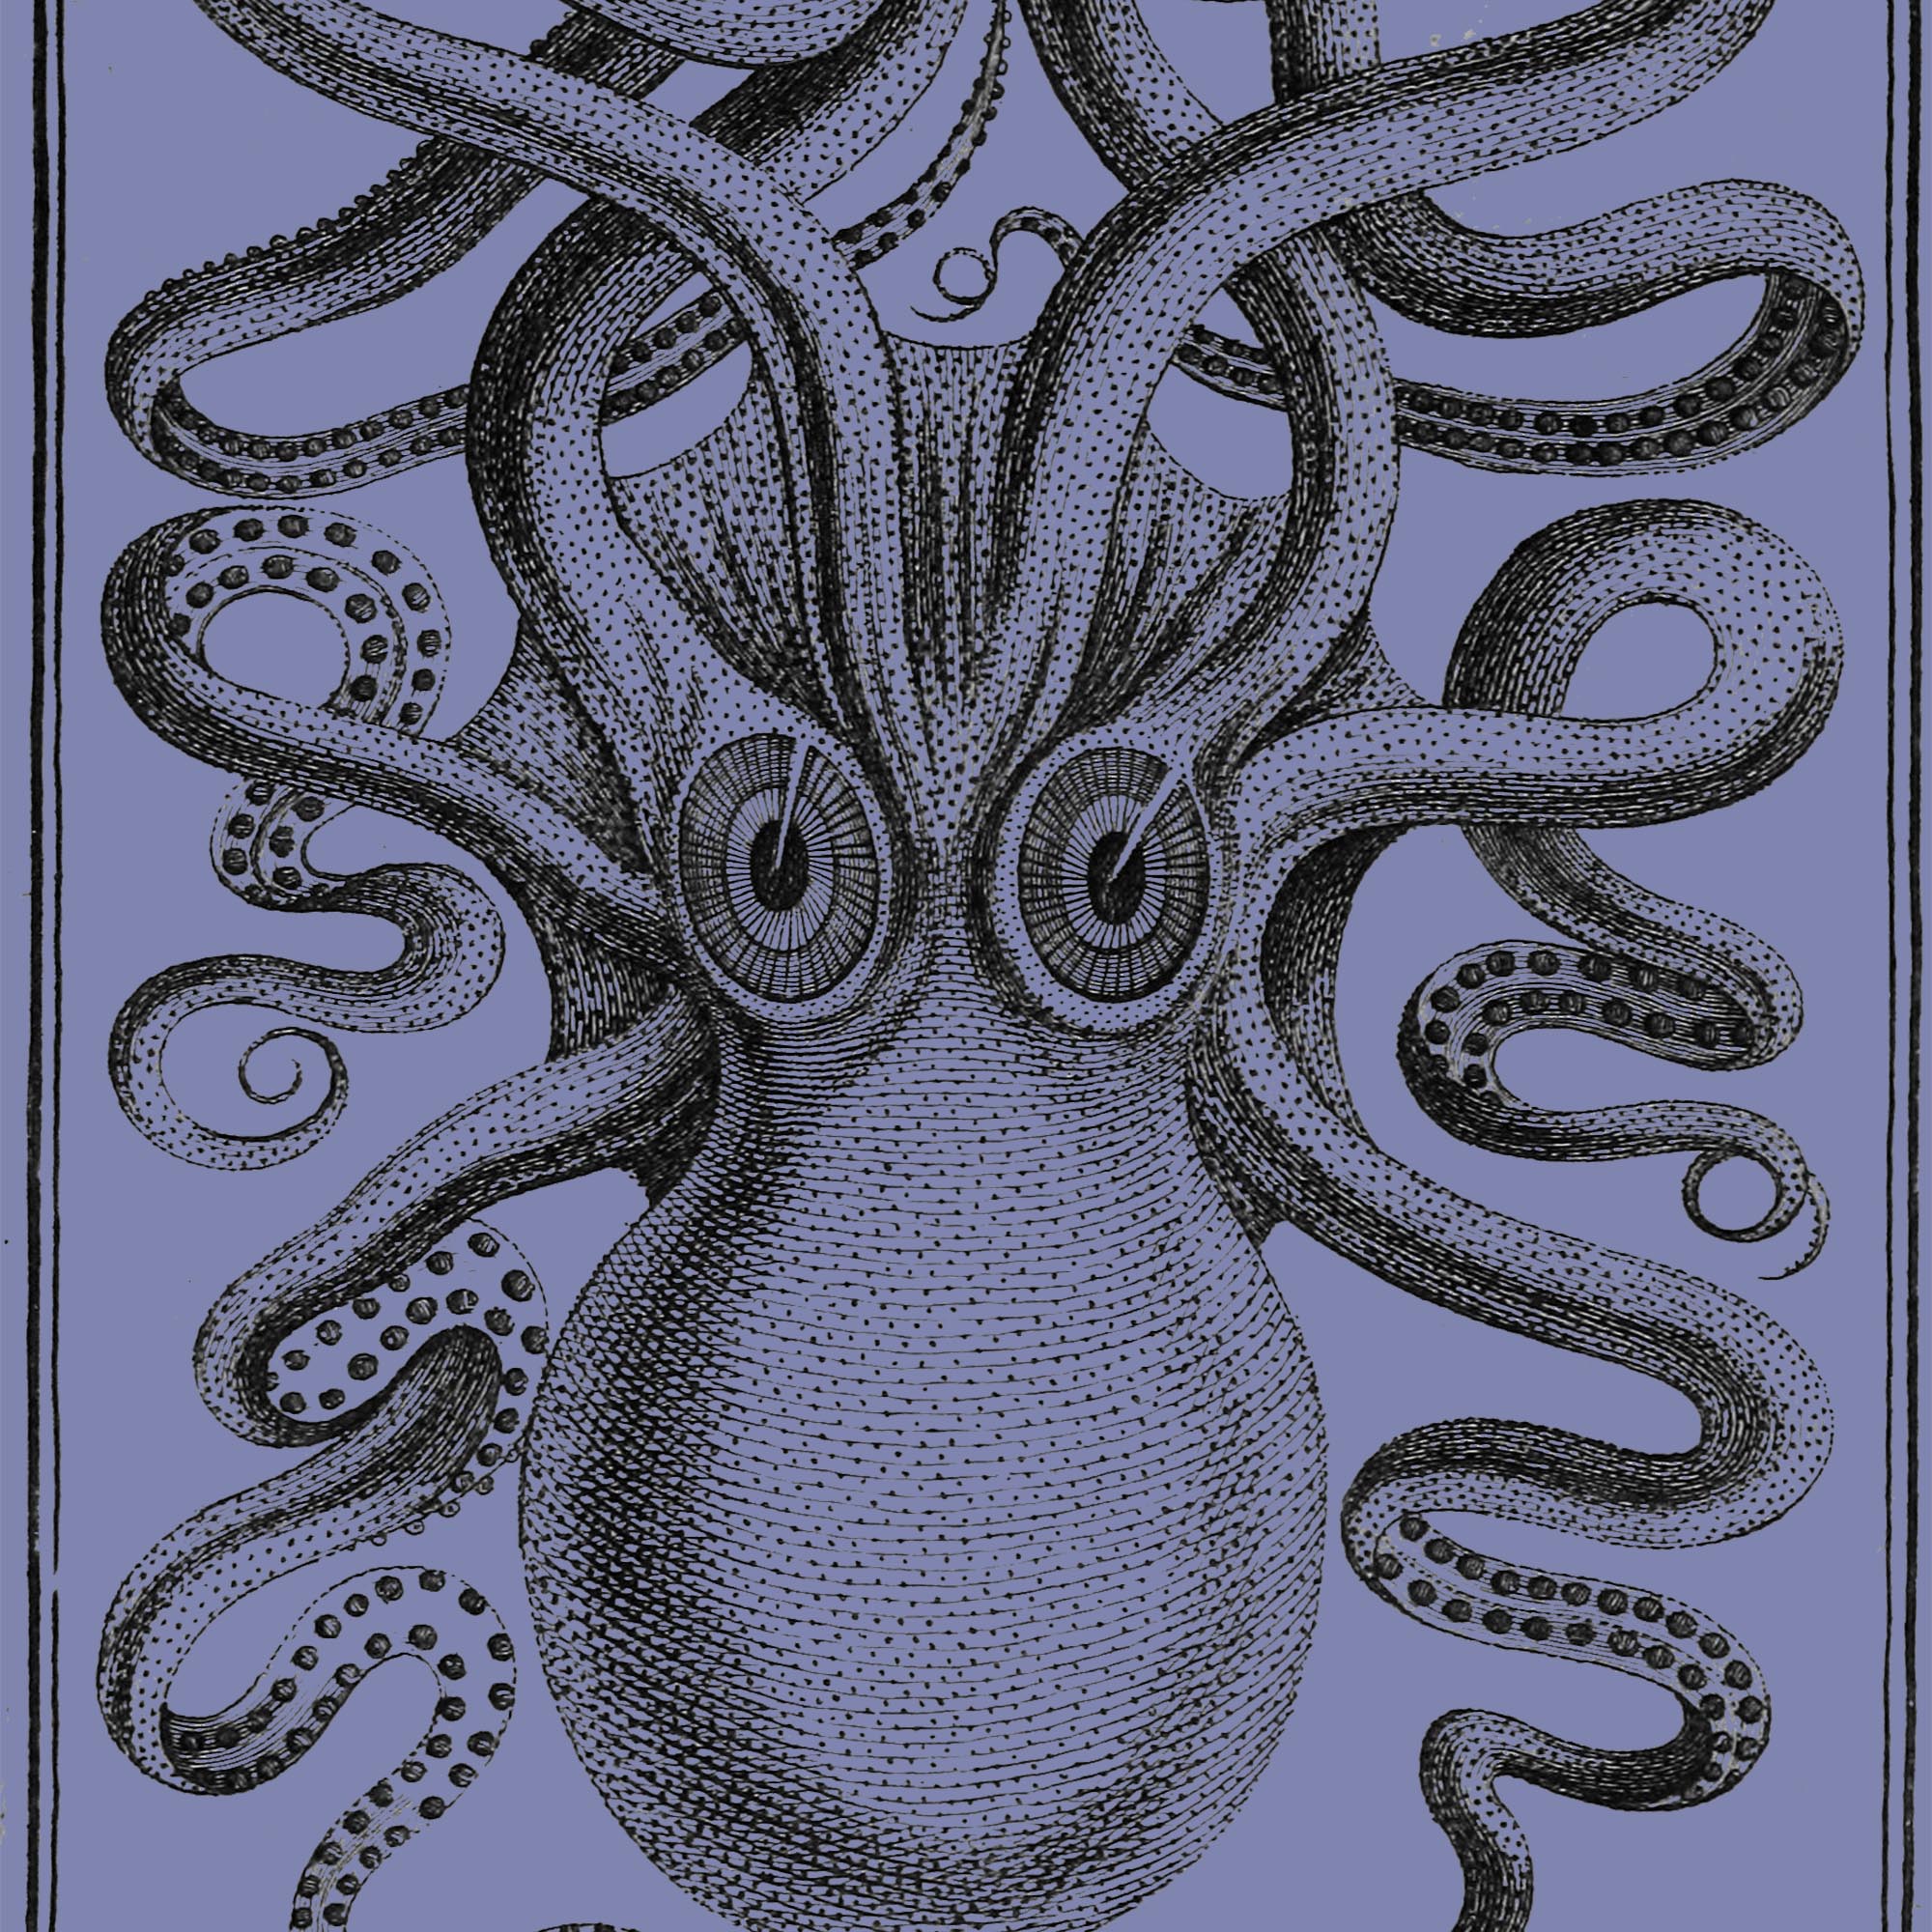 T-Shirts The Kraken, Norse Viking Mythology, Seamonster, Giant Squid, Octopus Vintage Graphic T-Shirt